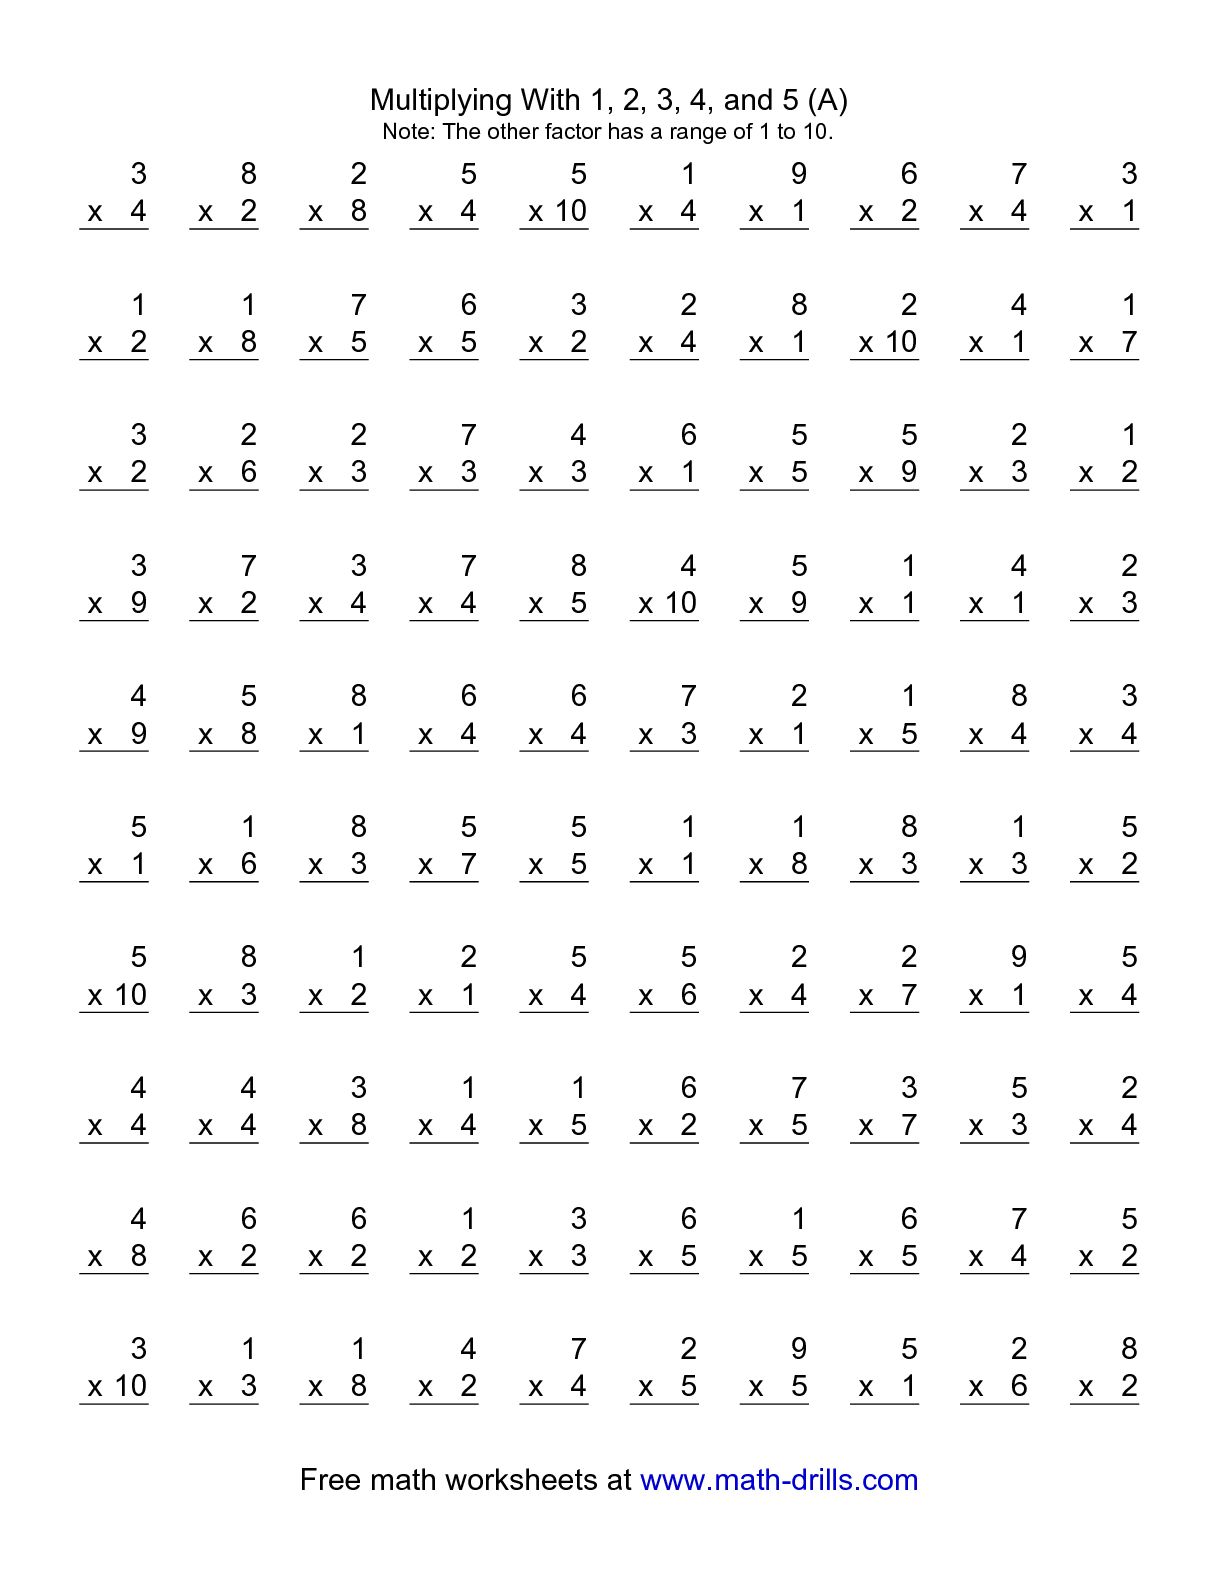 100 Multiplication Worksheet Image